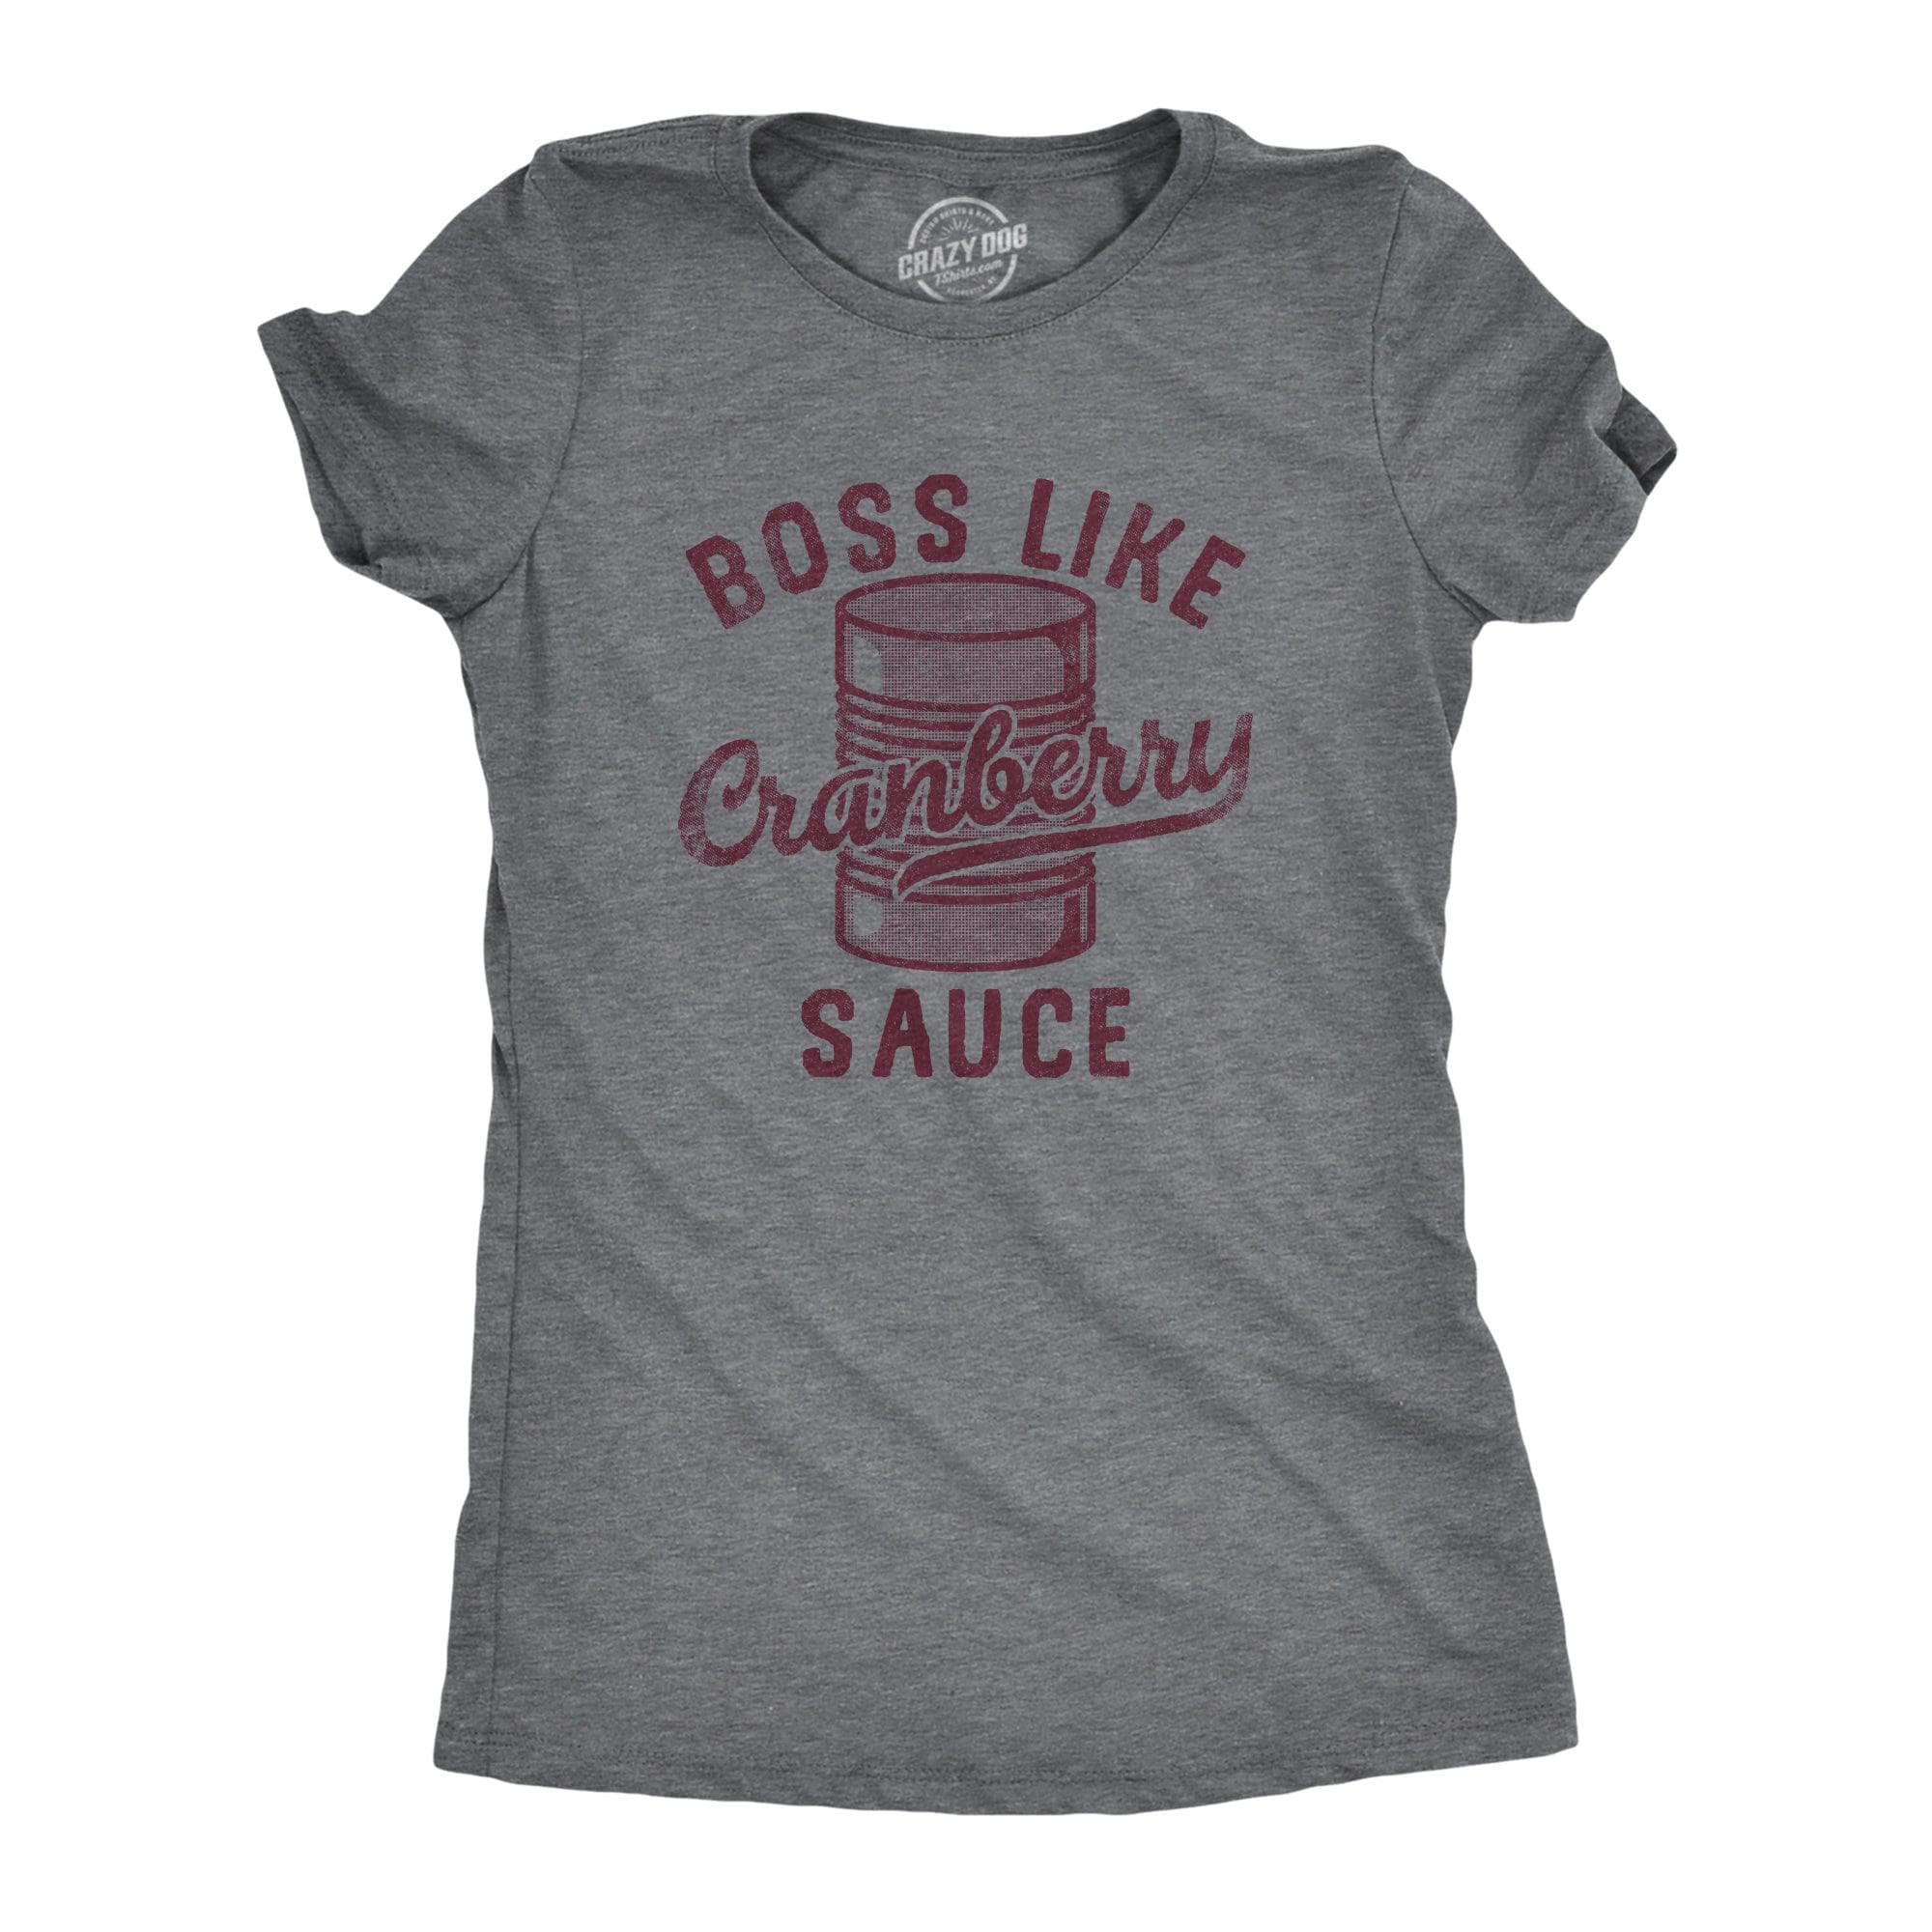 Boss Like Cranberry Sauce Women's Tshirt  -  Crazy Dog T-Shirts